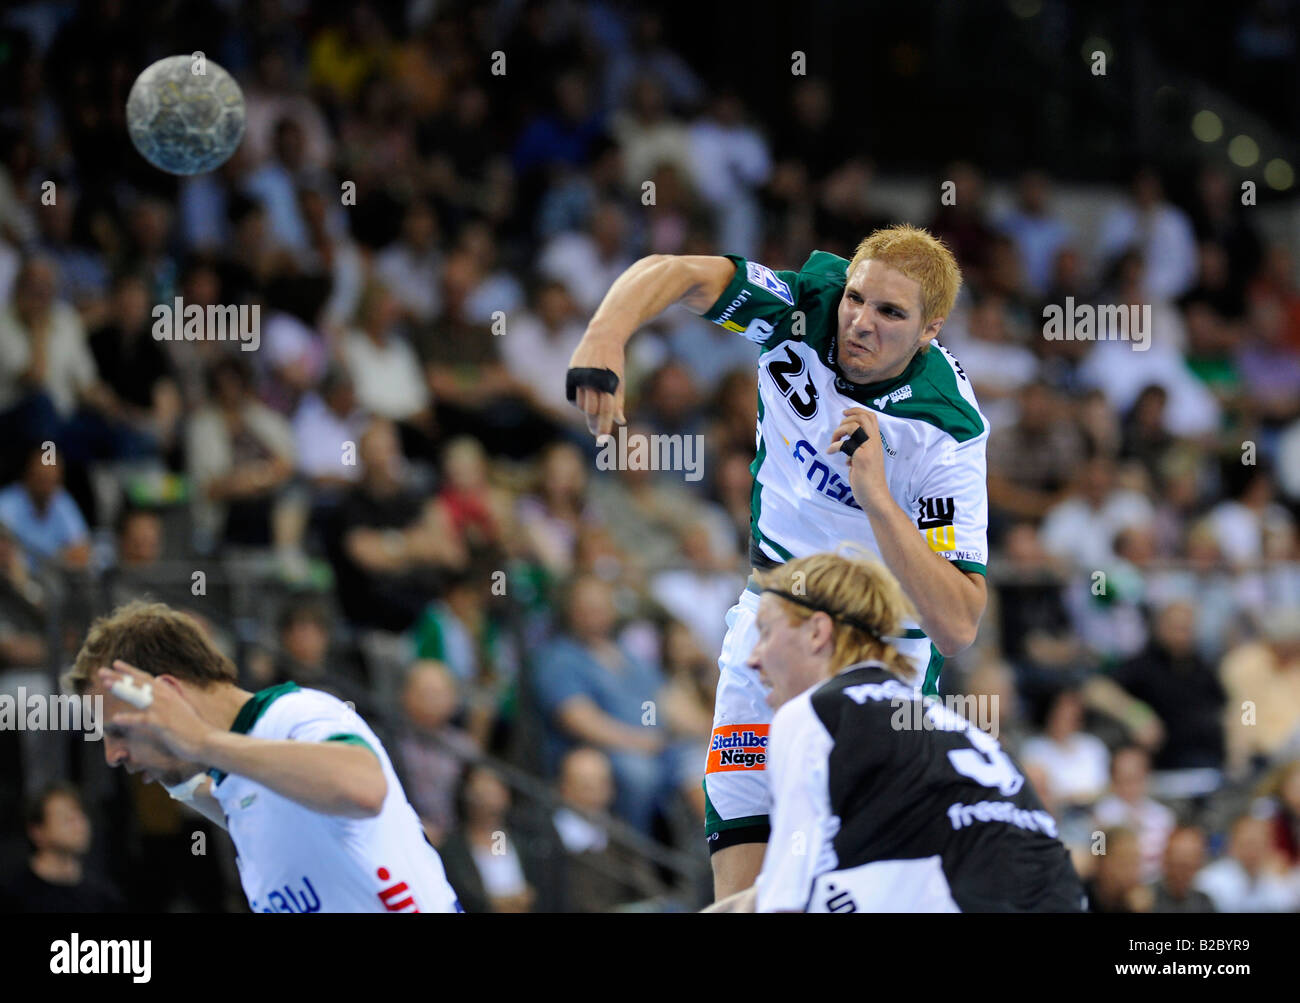 Handball, Nikola Manojlovic, Frisch auf! Goeppingen, tossing the ball Stock Photo